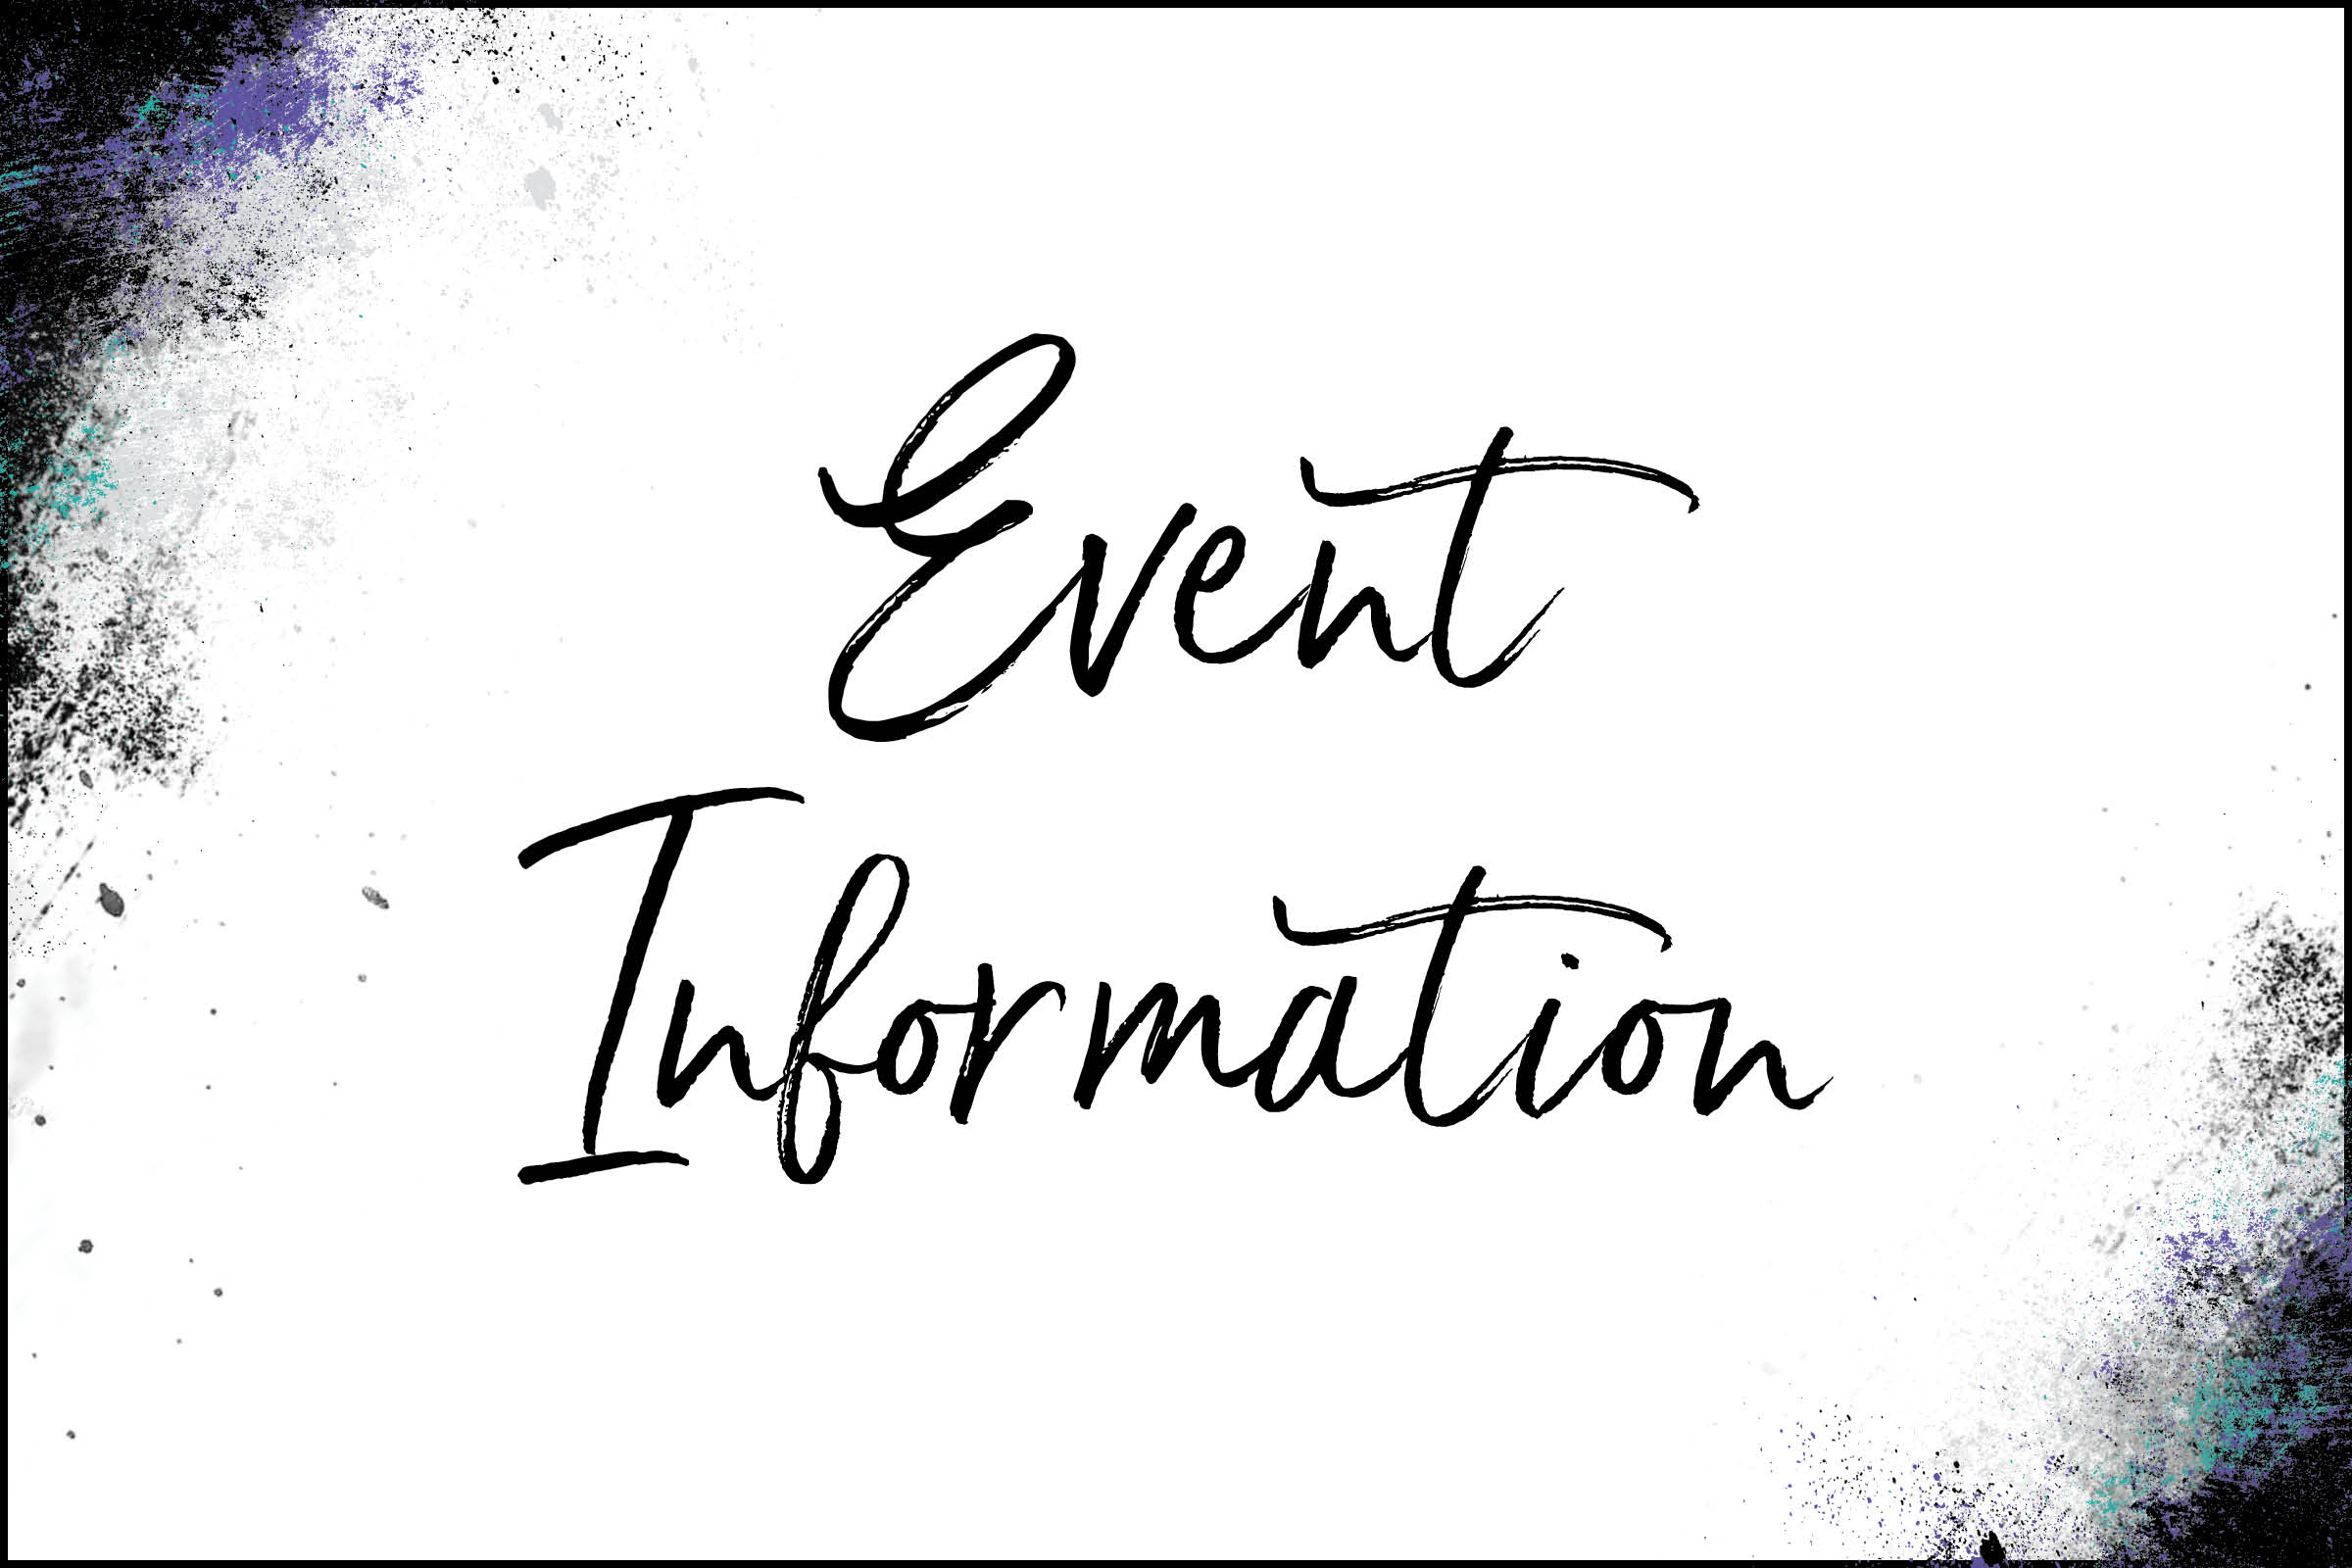 Event Information button